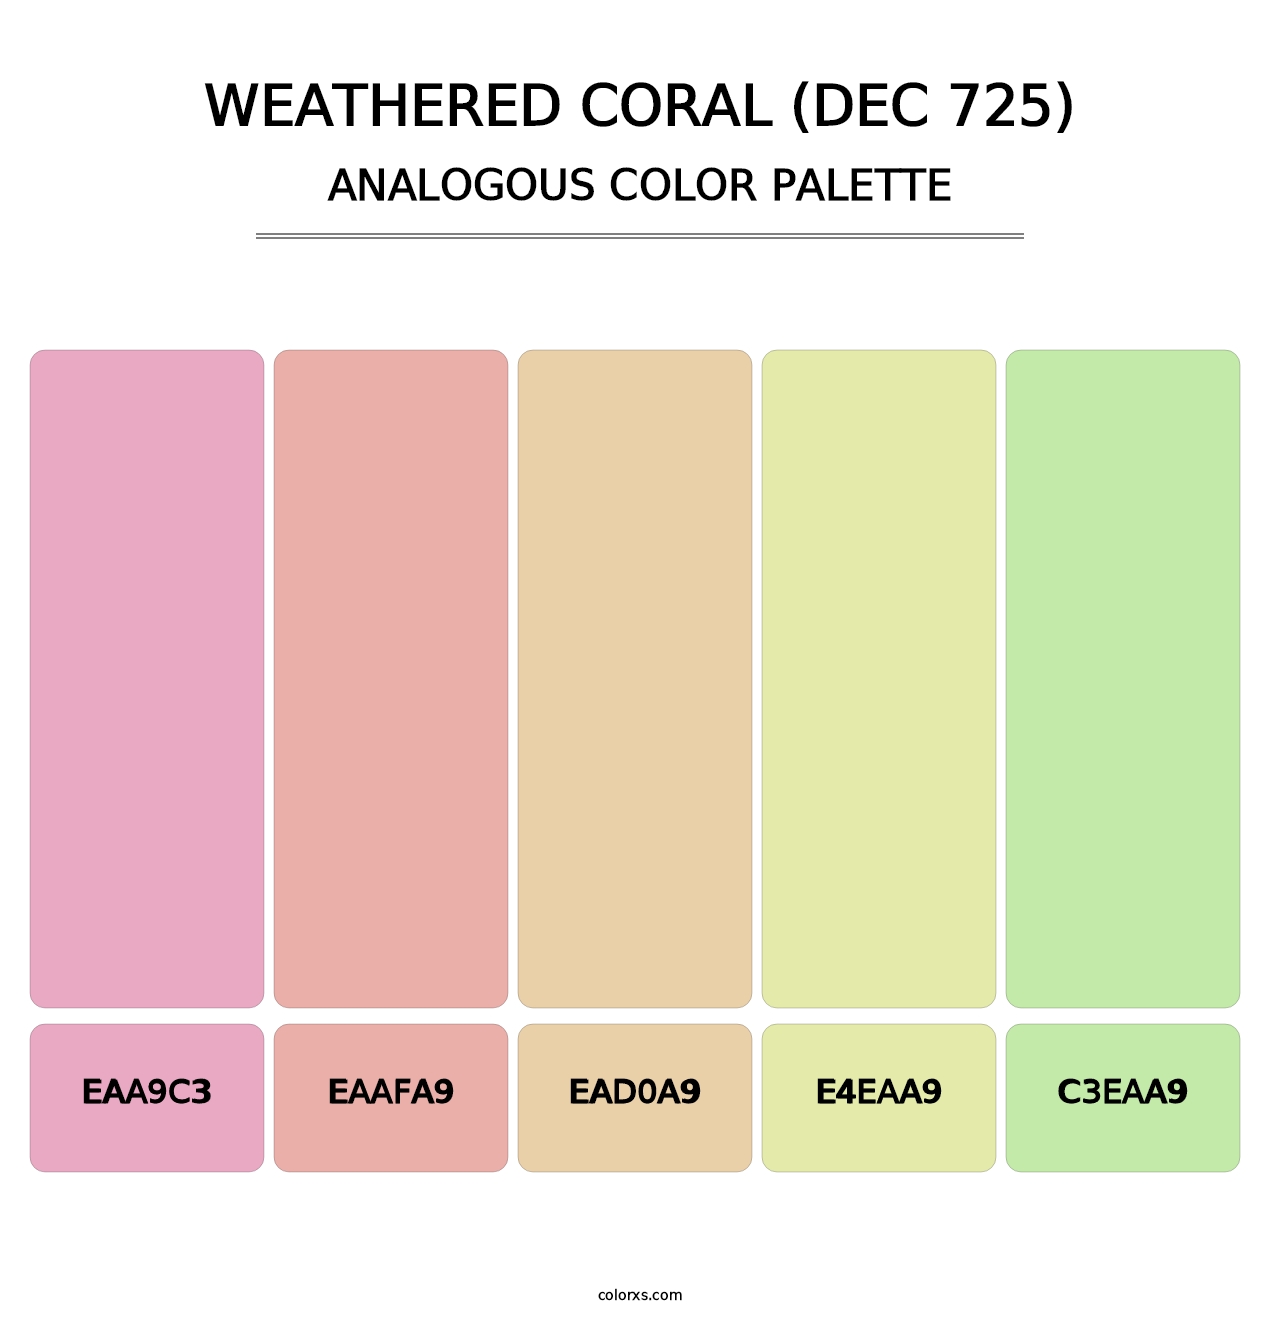 Weathered Coral (DEC 725) - Analogous Color Palette